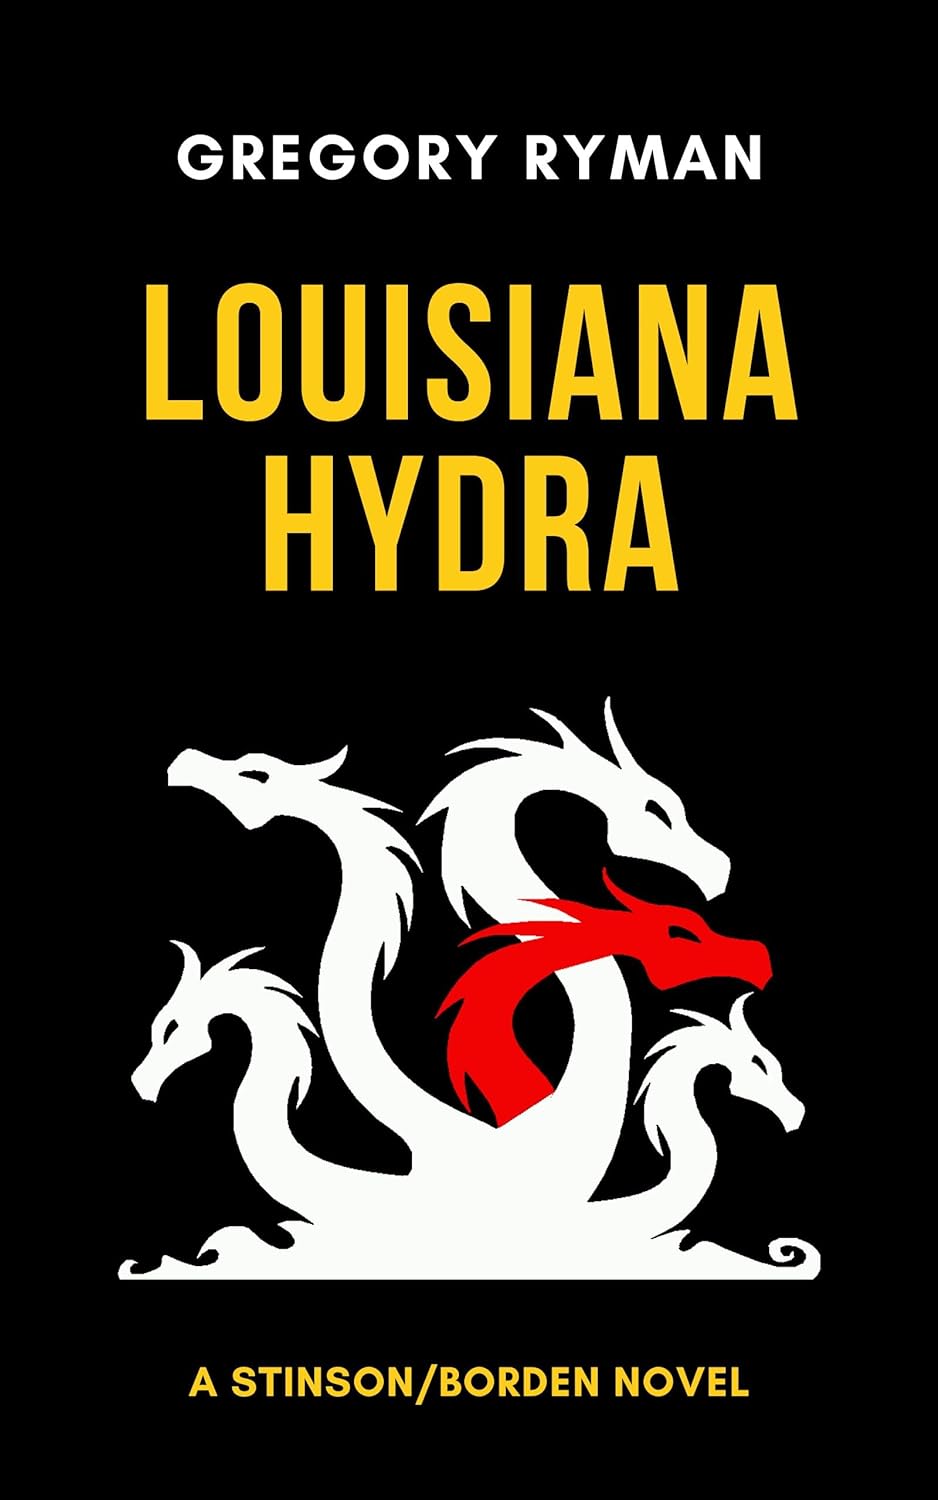 Louisiana Hydra by Gregory Ryman